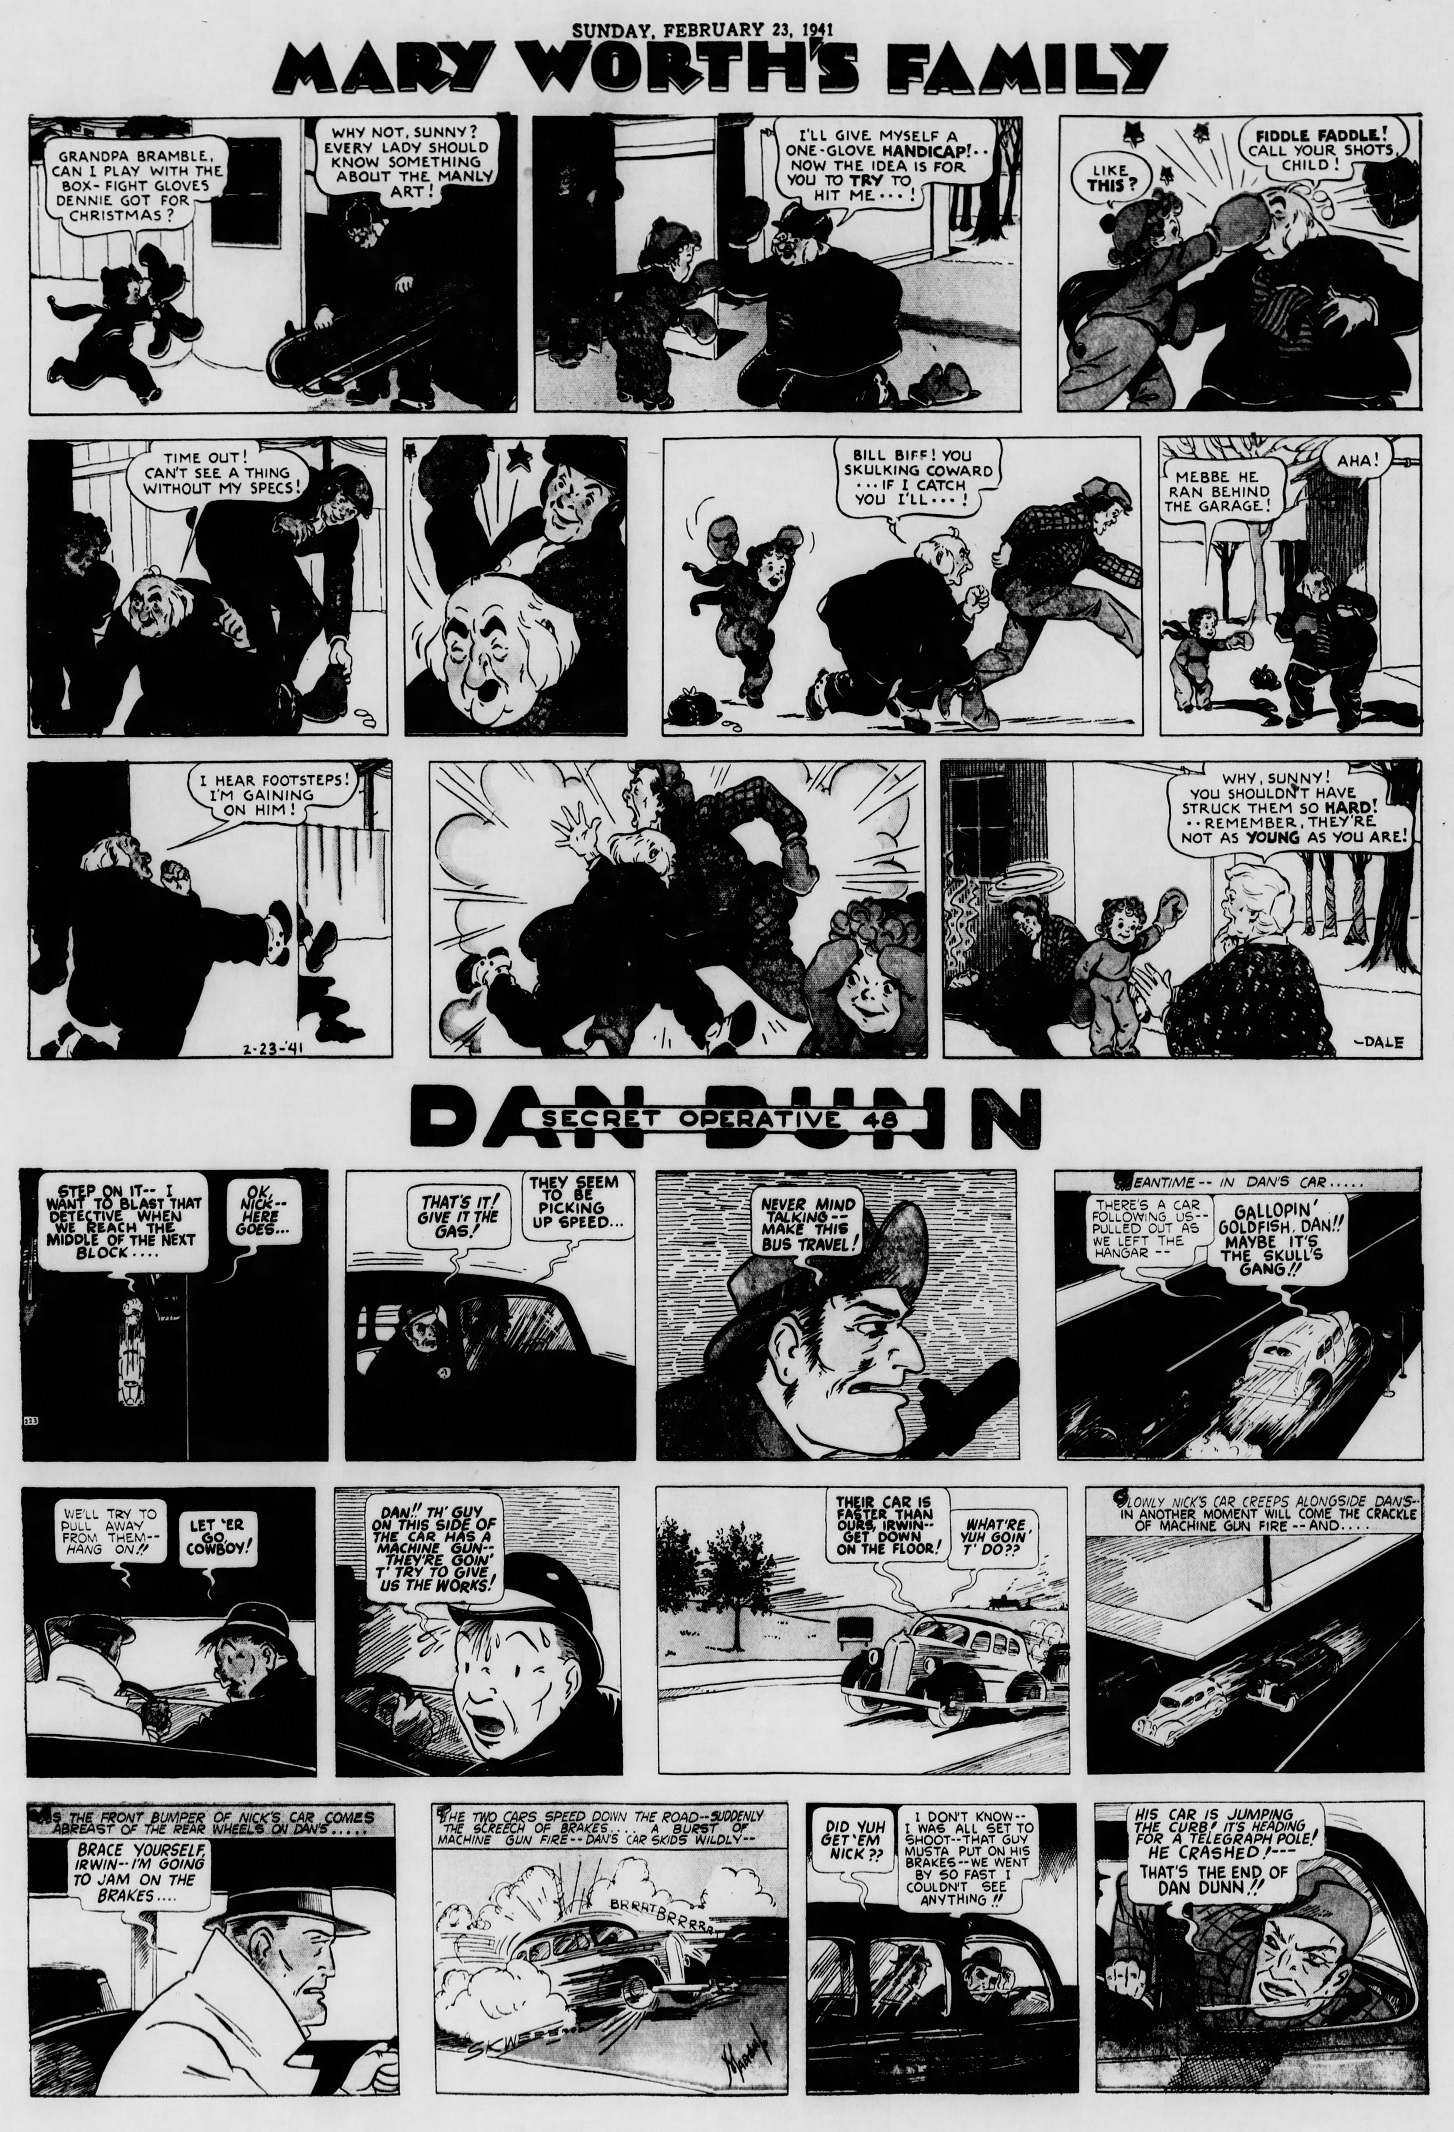 The_Brooklyn_Daily_Eagle_Sun__Feb_23__1941_(7).jpg